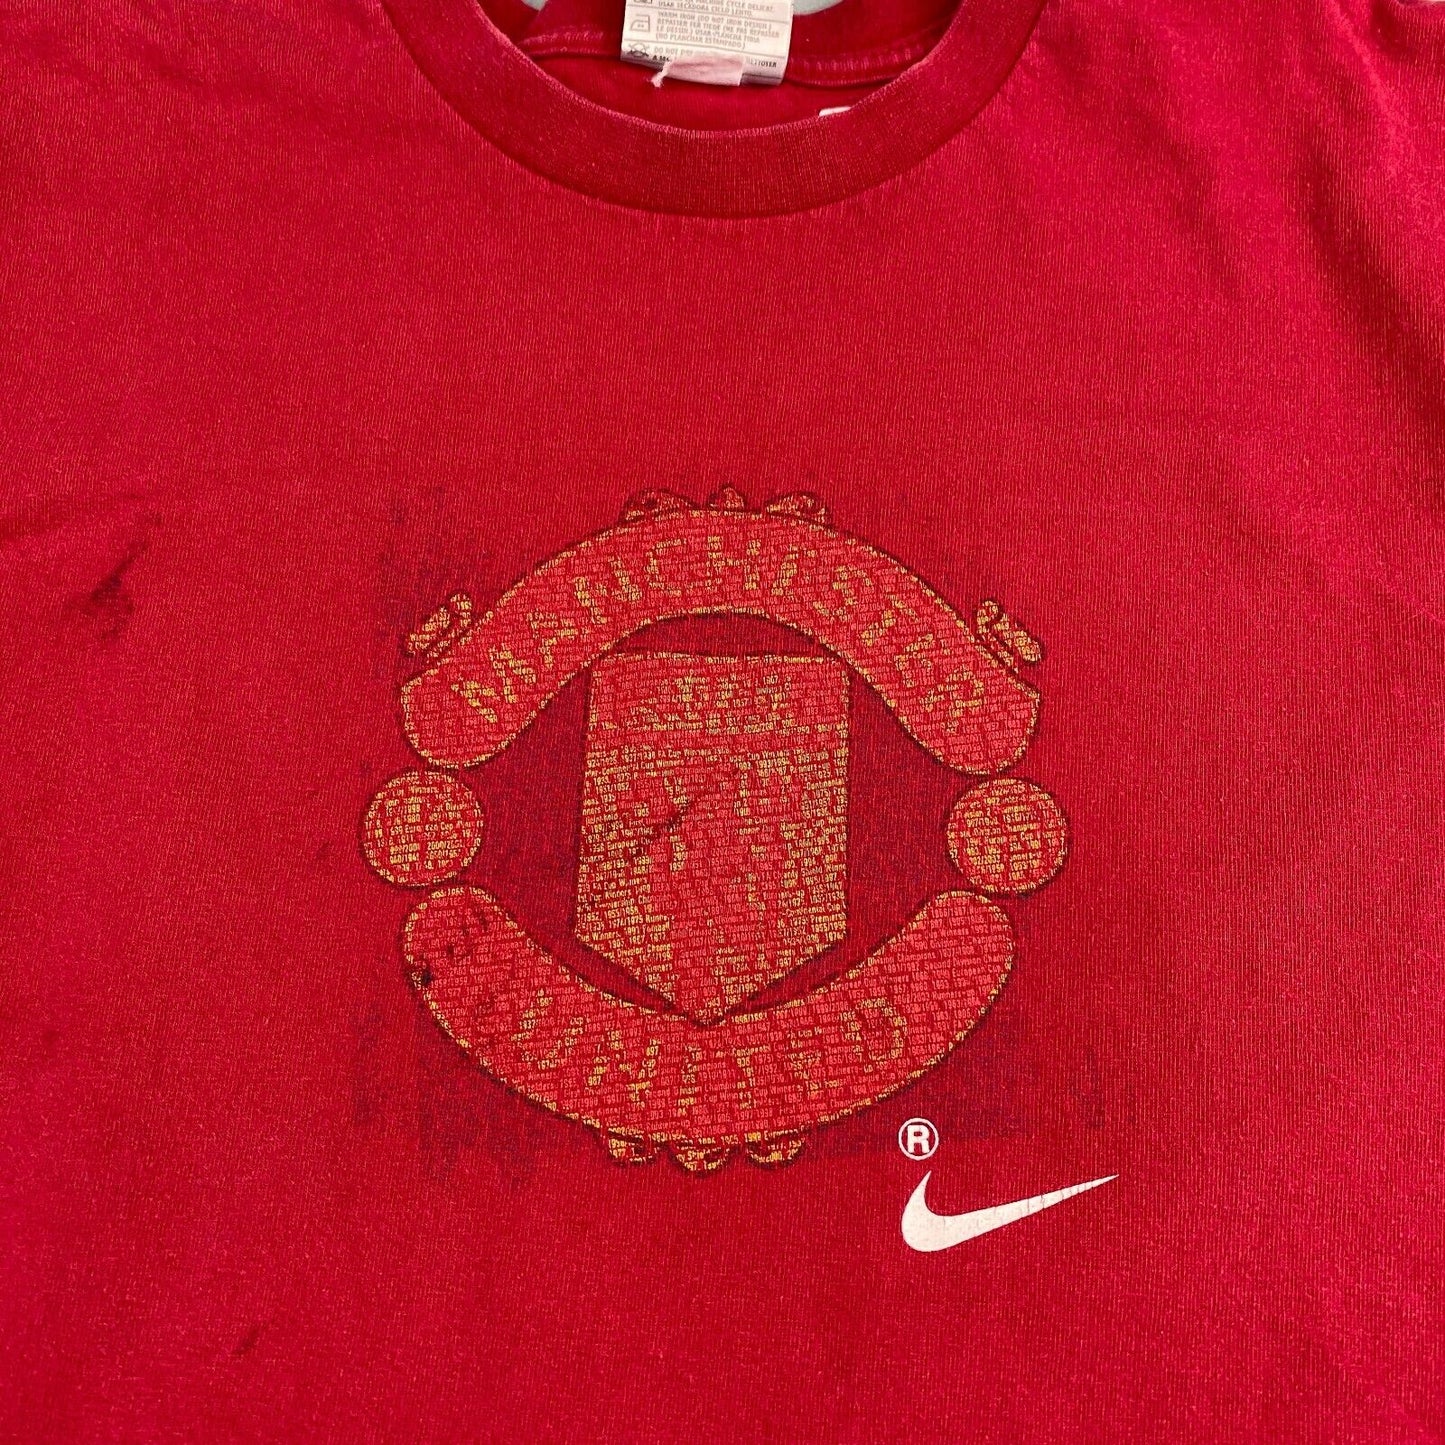 VINTAGE NIKE Manchester United Red T-Shirt sz Medium Adult